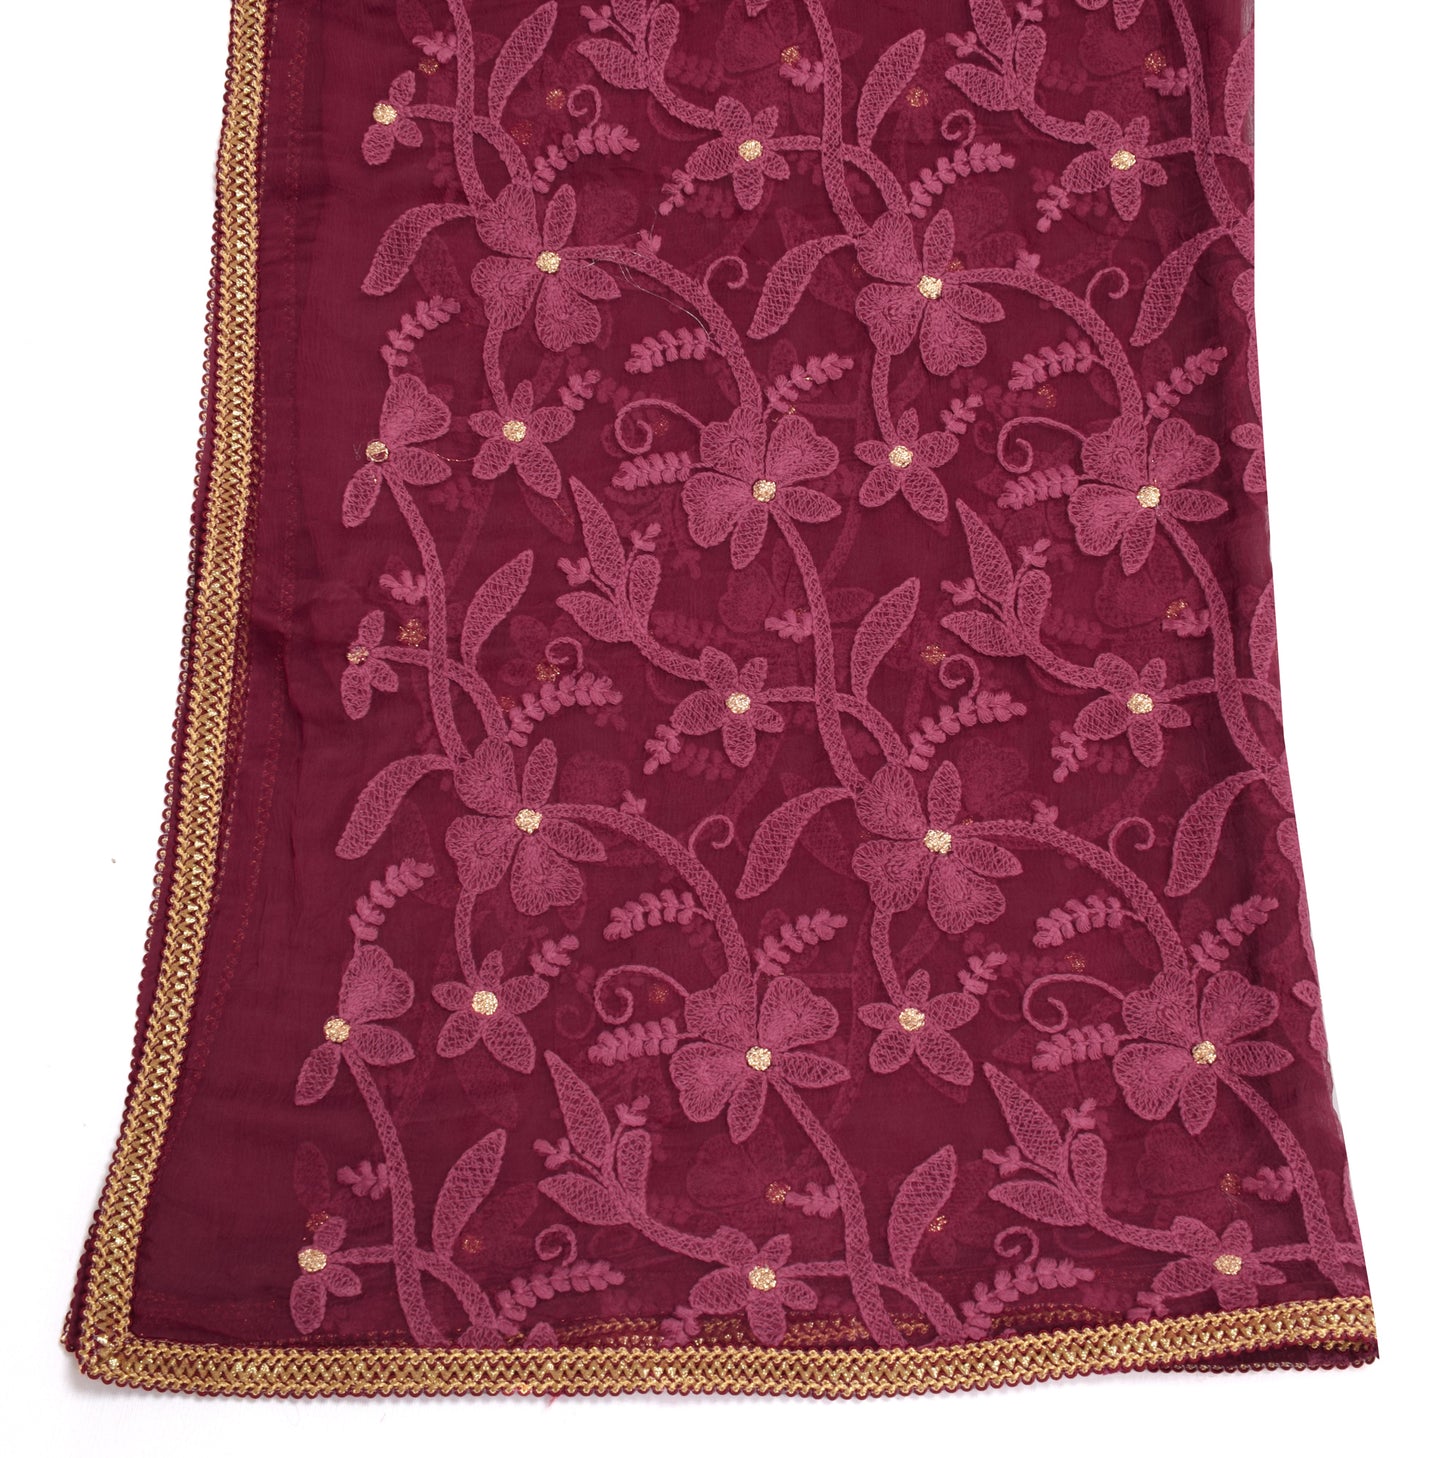 Sushila Vintage Maroon Dupatta 100%Pure Chiffon Silk Embroidered Long Stole Wrap